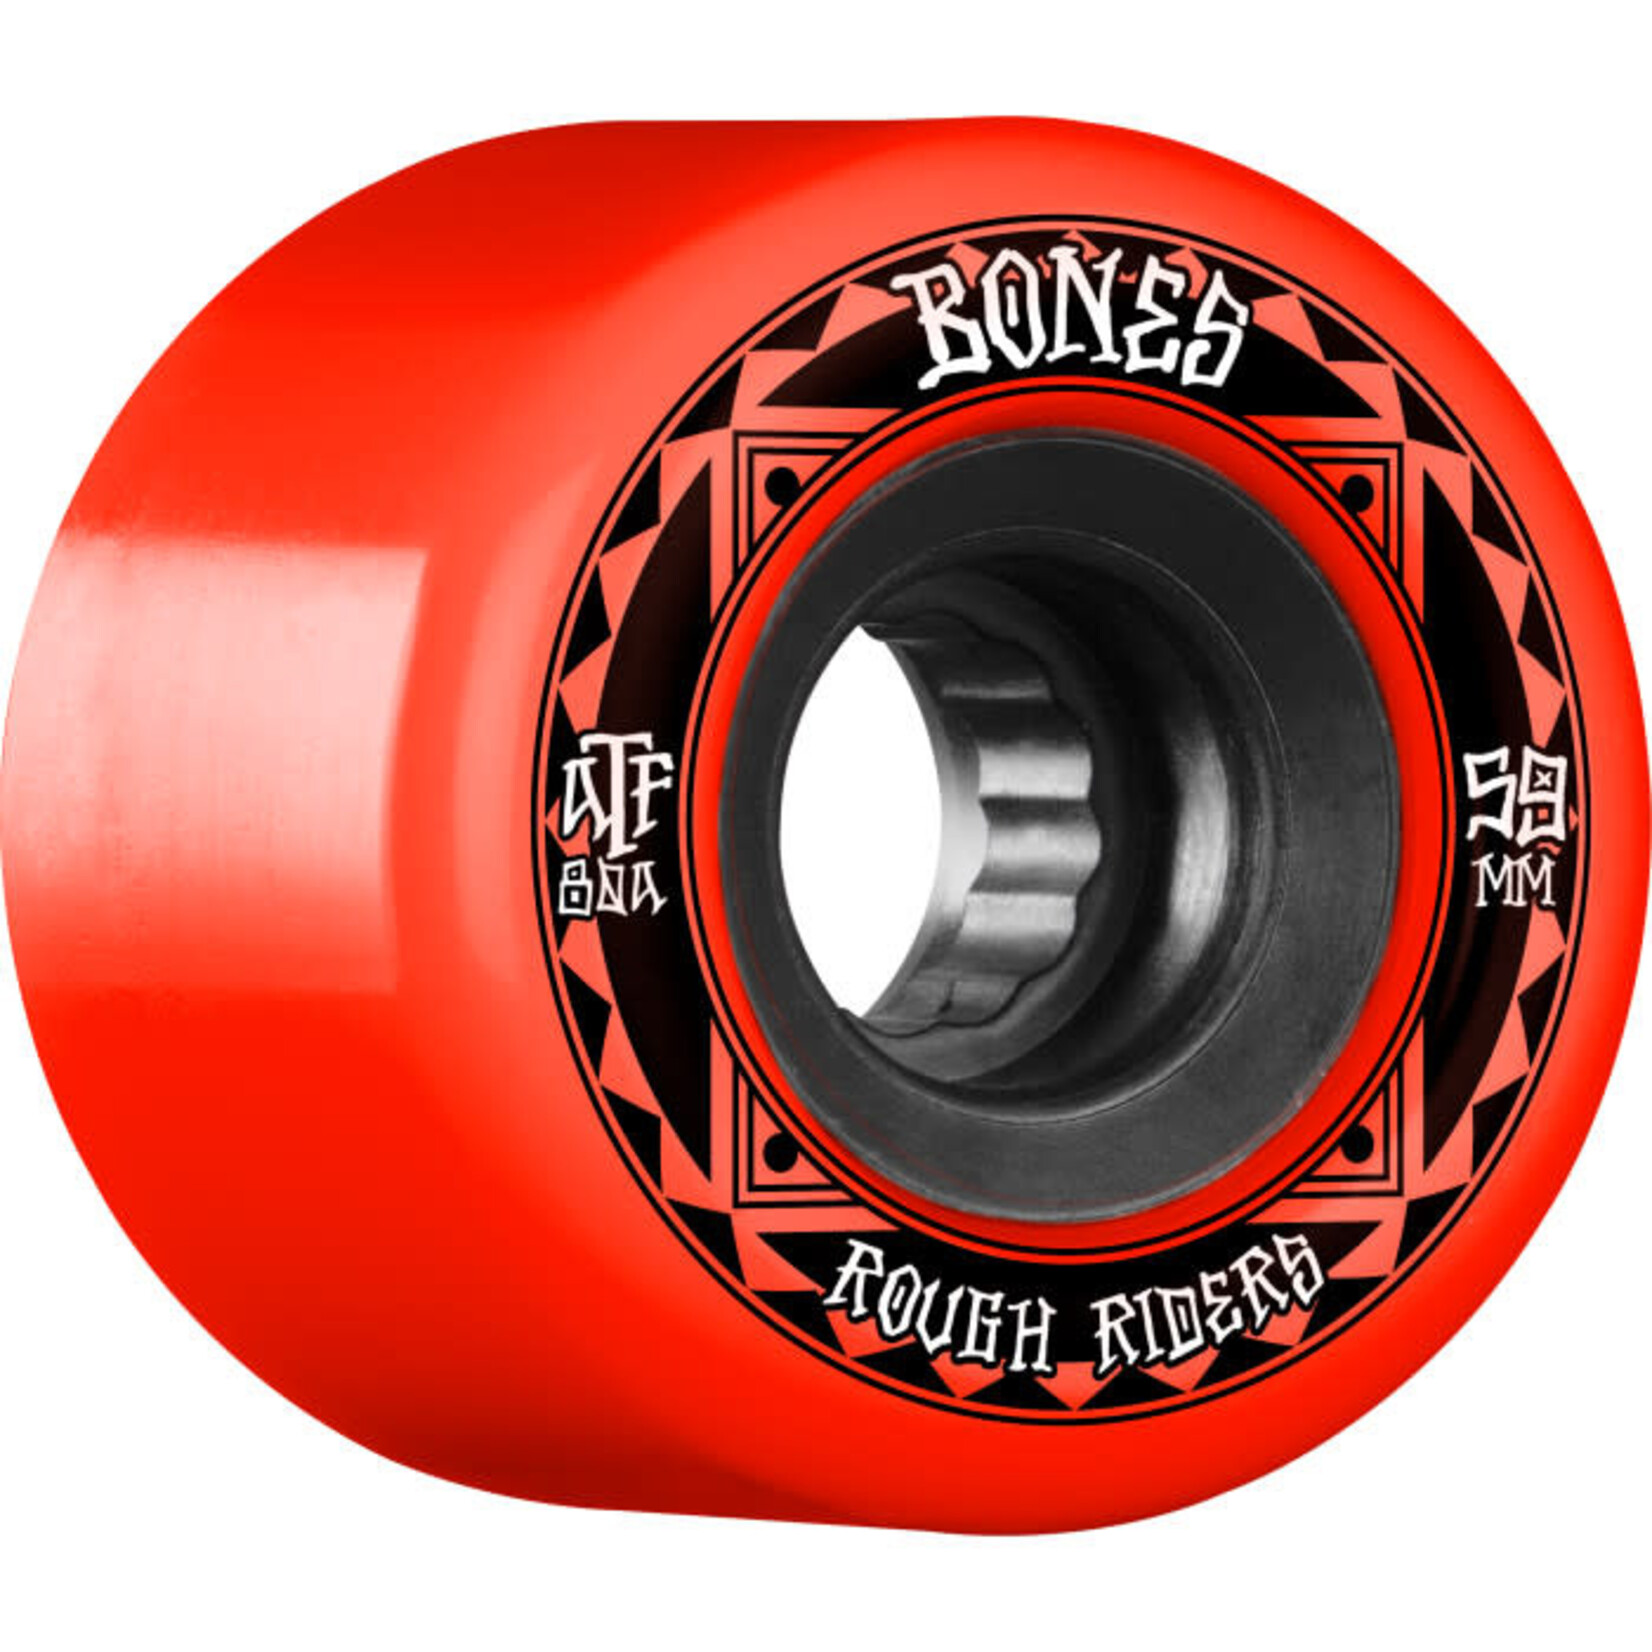 Bones Wheels BONES WHEELS ATF Rough Rider Skateboard Wheels Runners 59mm 80a Red